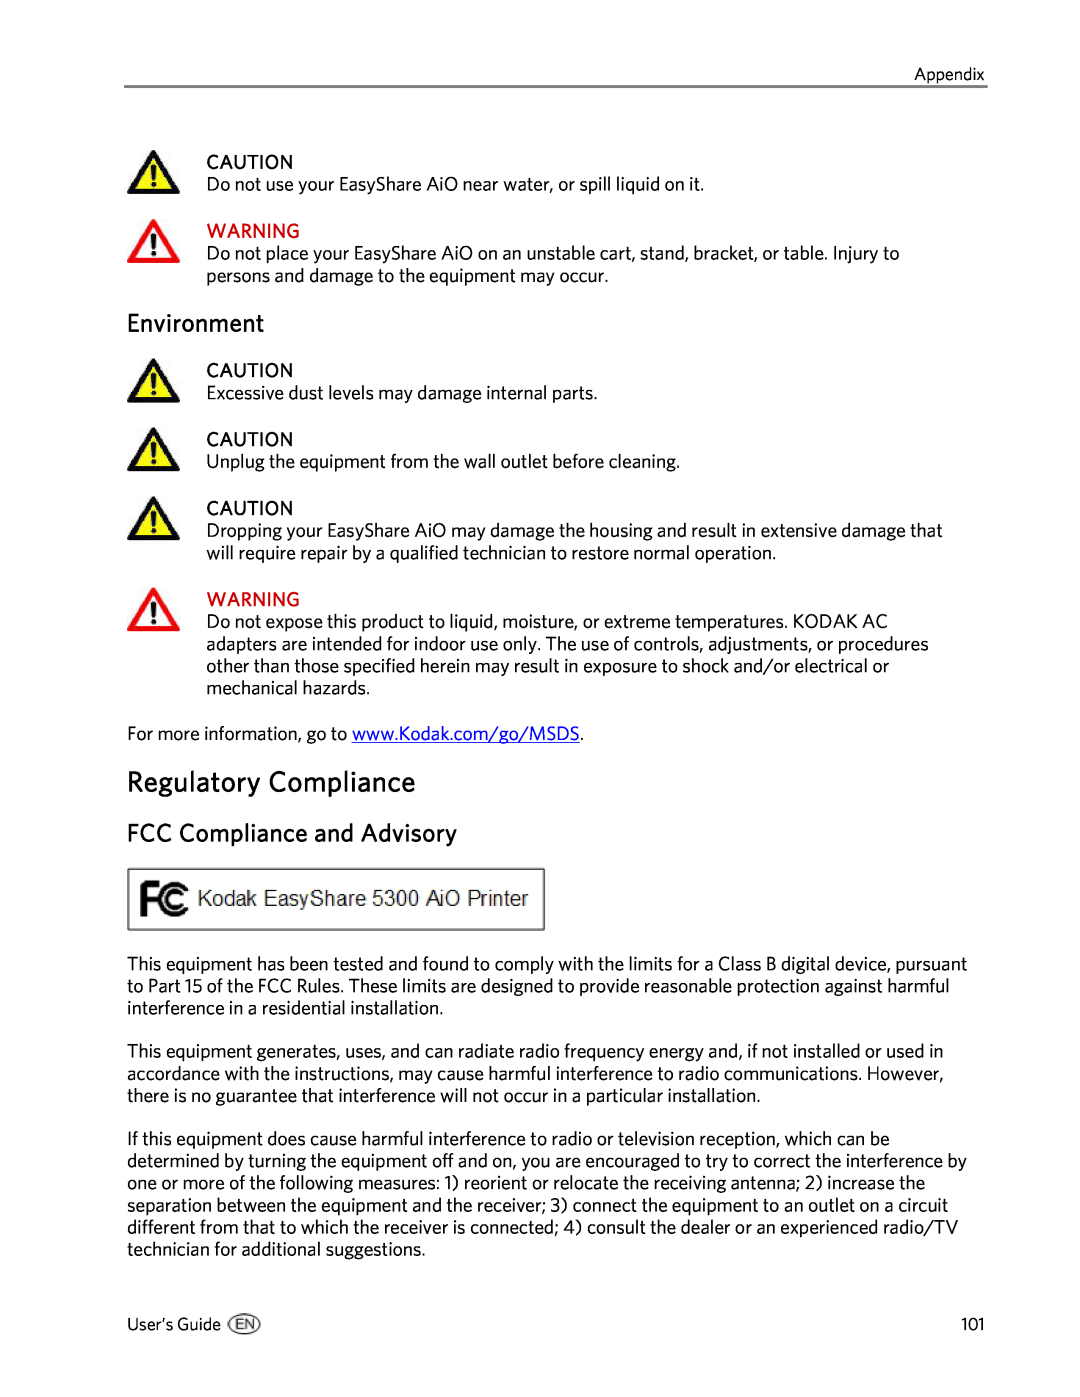 Kodak 5300 manual Regulatory Compliance, Environment, FCC Compliance and Advisory 